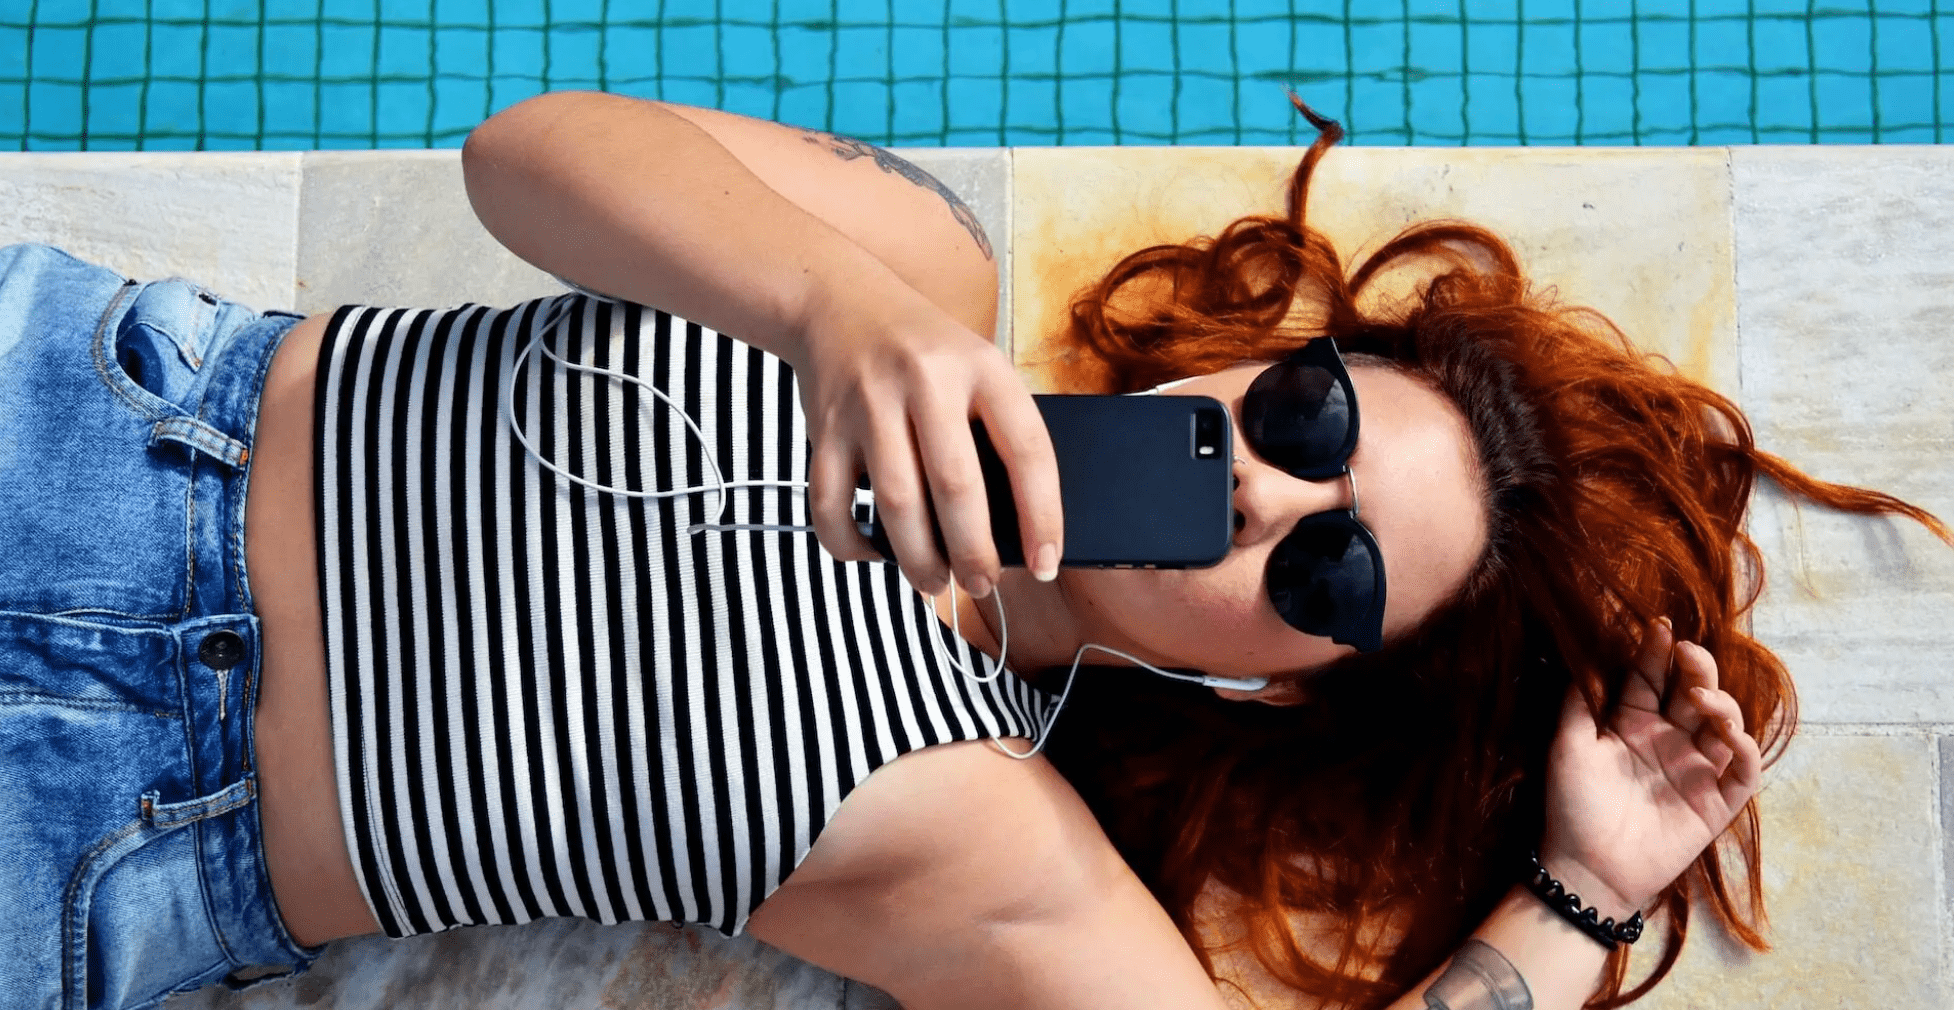 Chica mirando su teléfono junto a una piscina | Unsplash